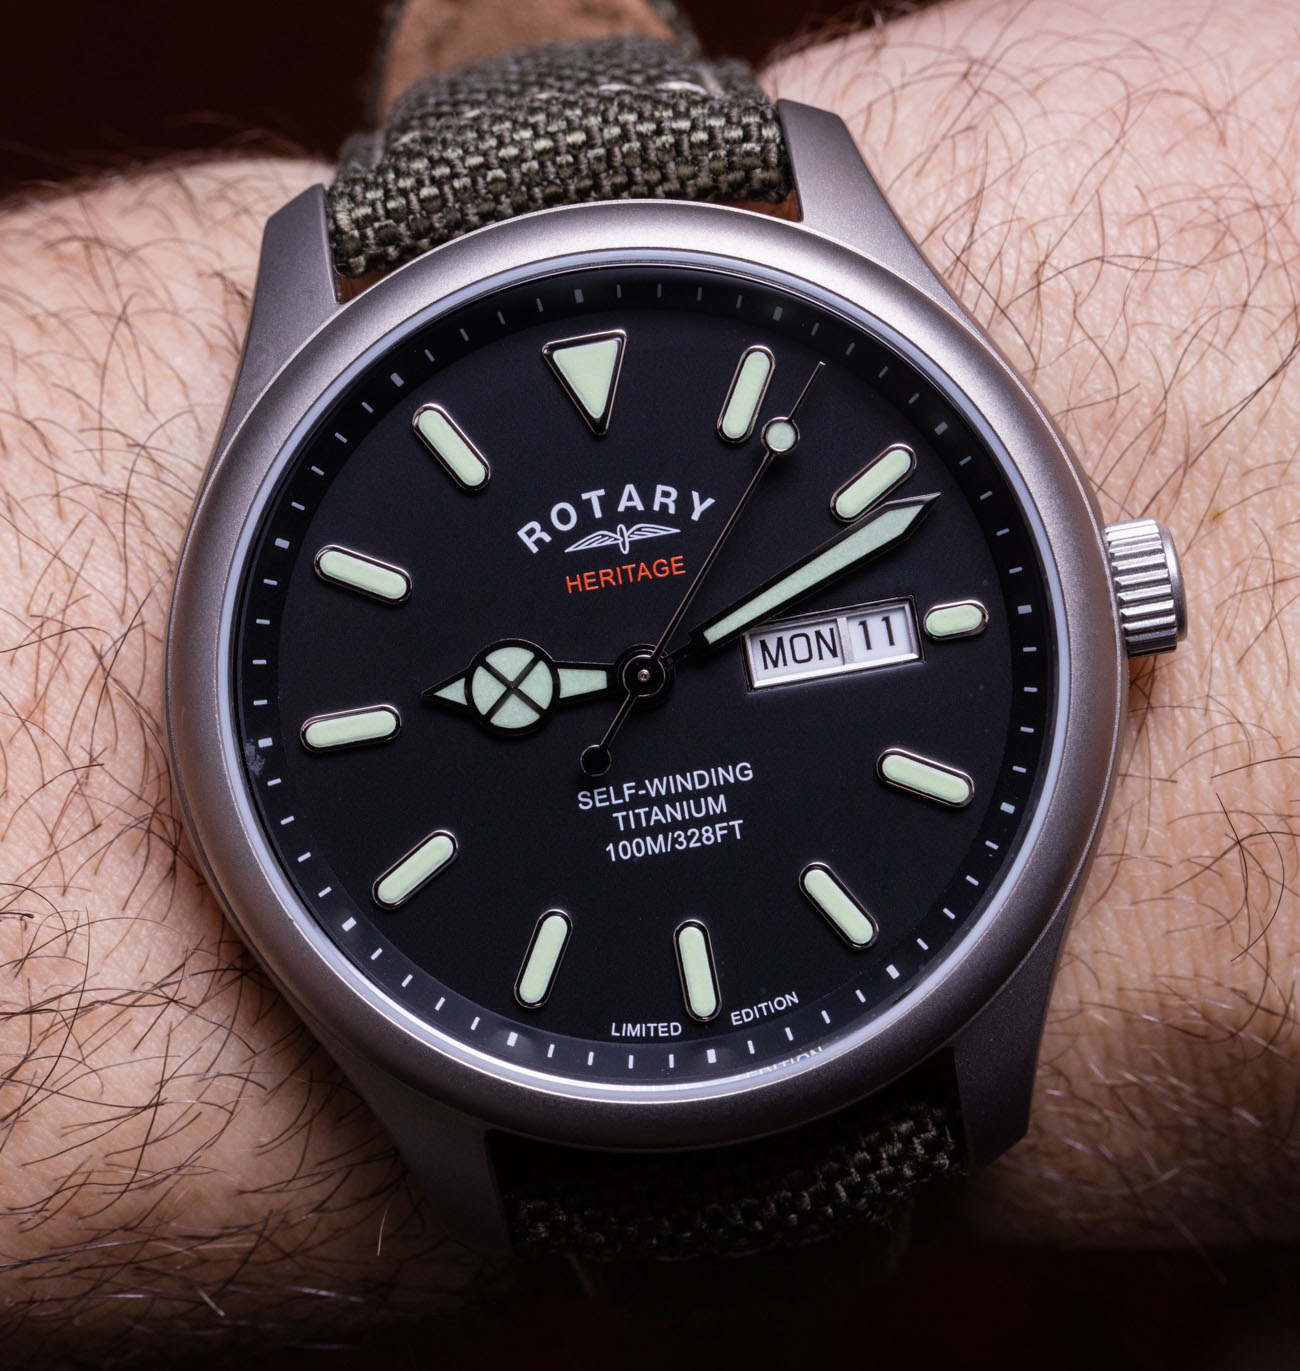 Rotary-Heritage-Titanium-GS05249-04-watch-16.jpg